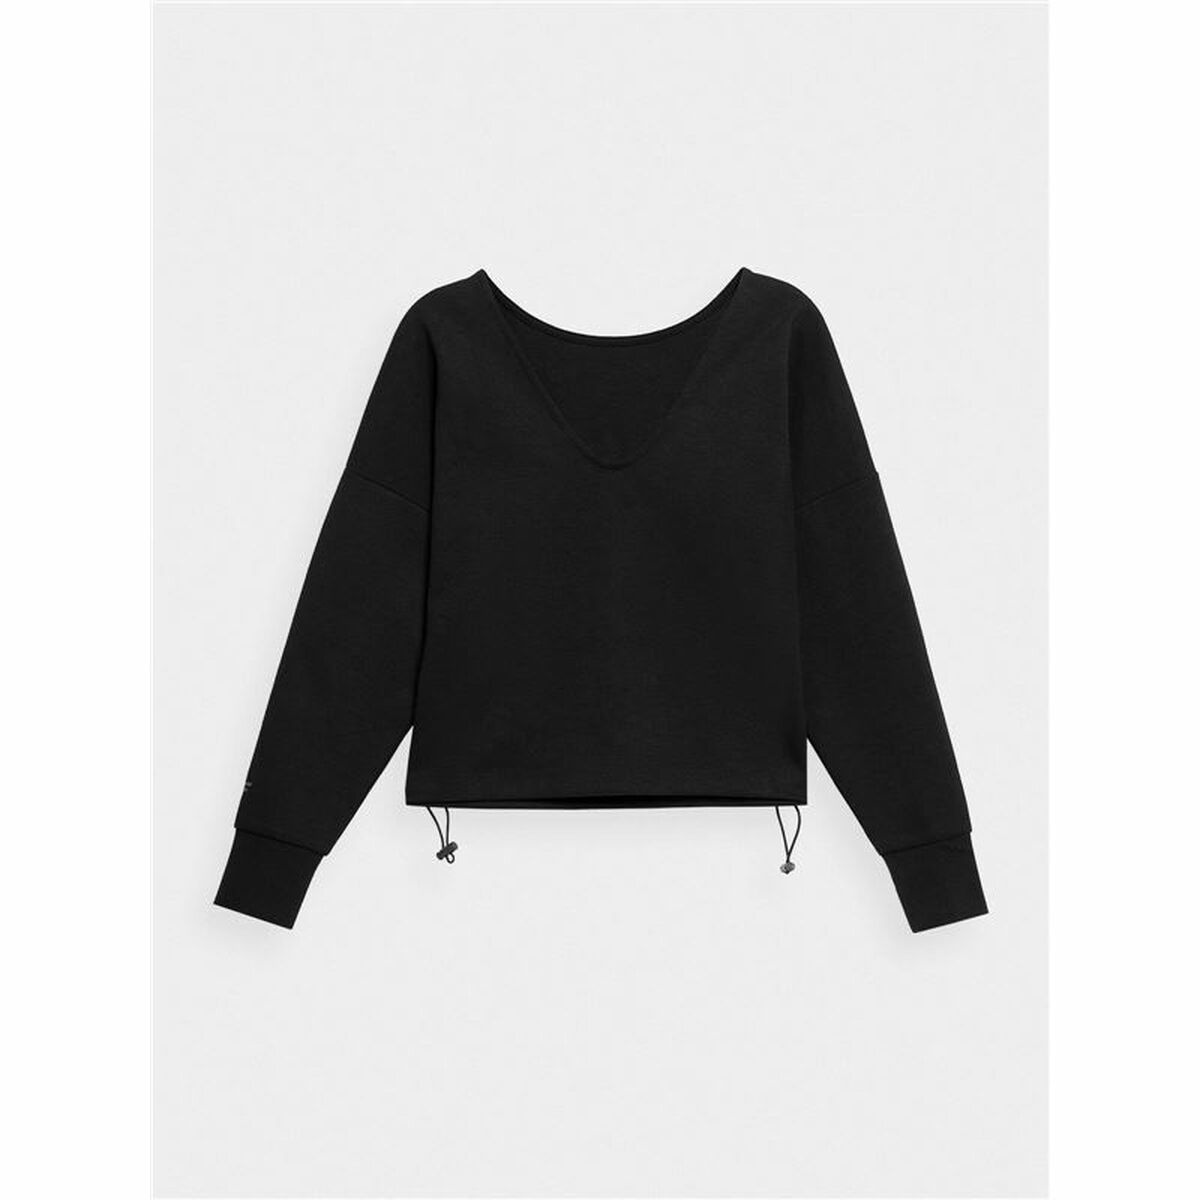 Women’s Sweatshirt without Hood 4F BLD026 Black